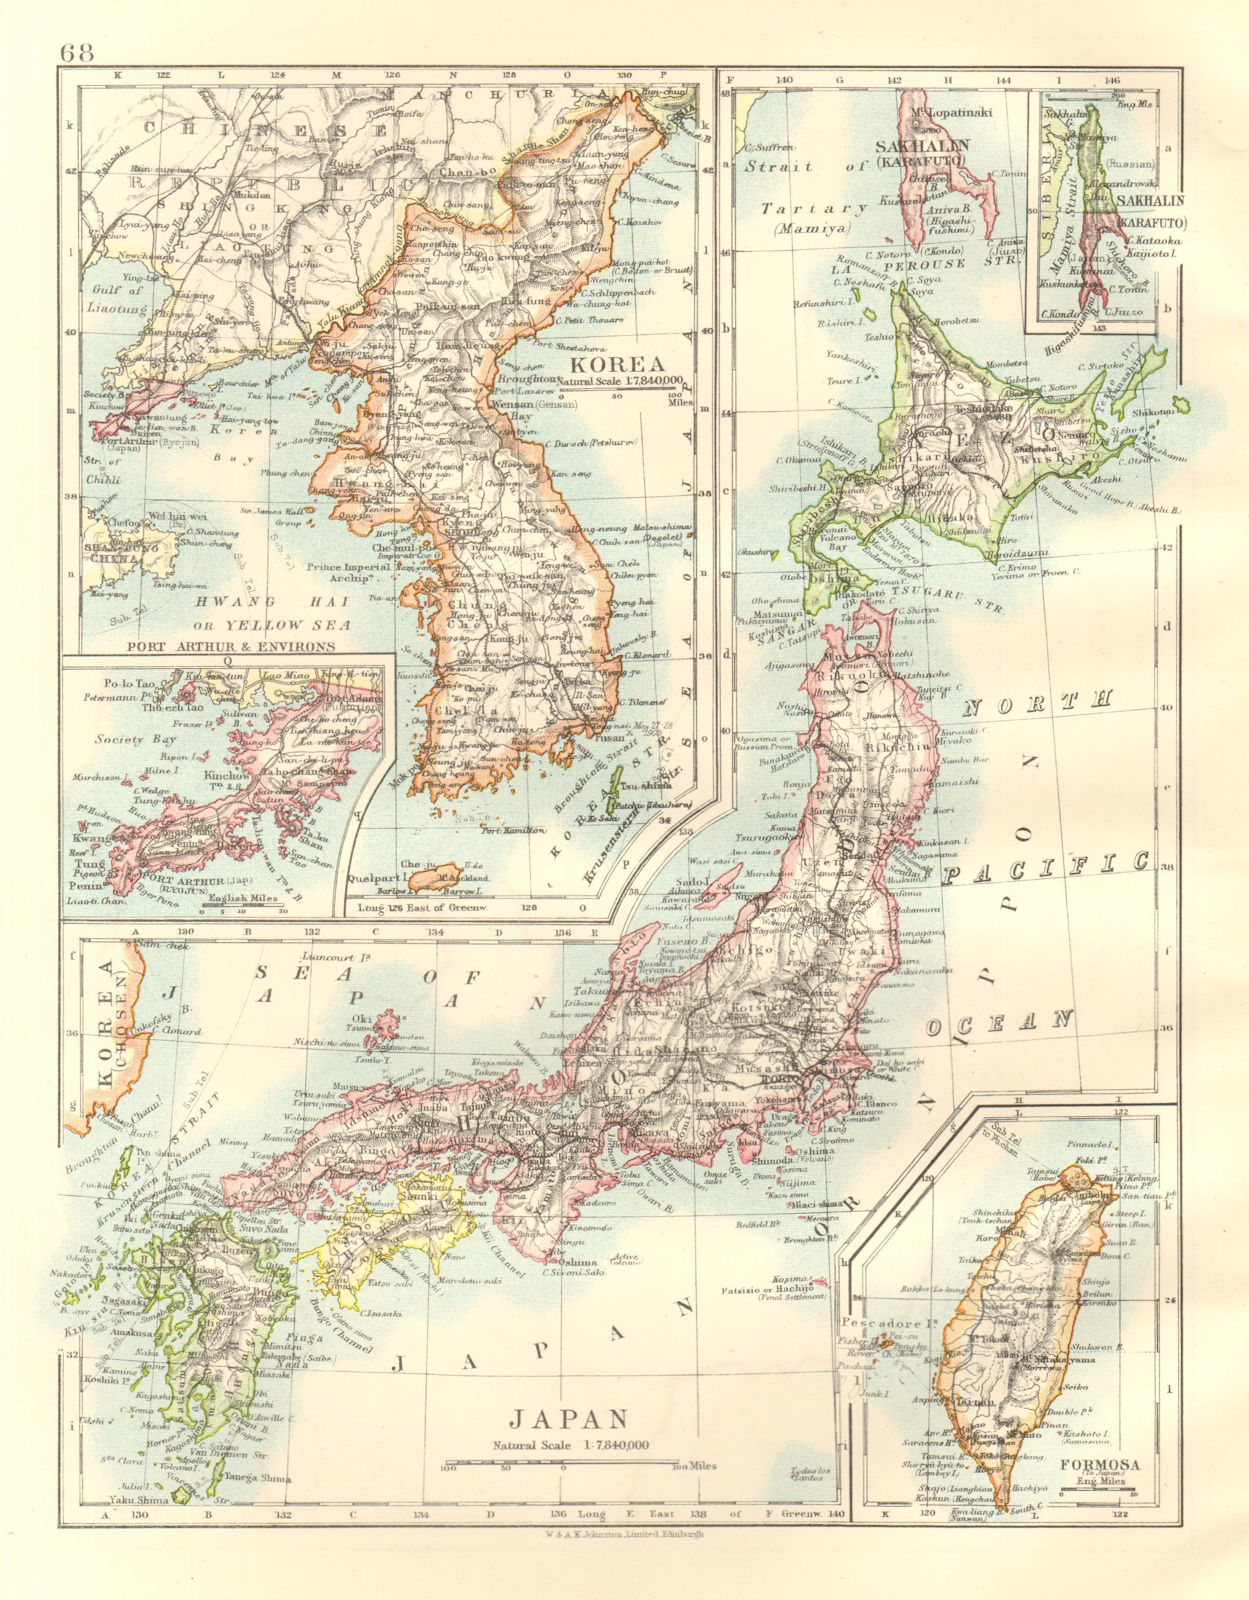 KOREA JAPAN FORMOSA. Japanese Port Arthur. Hachijo "penal settlement" 1920 map